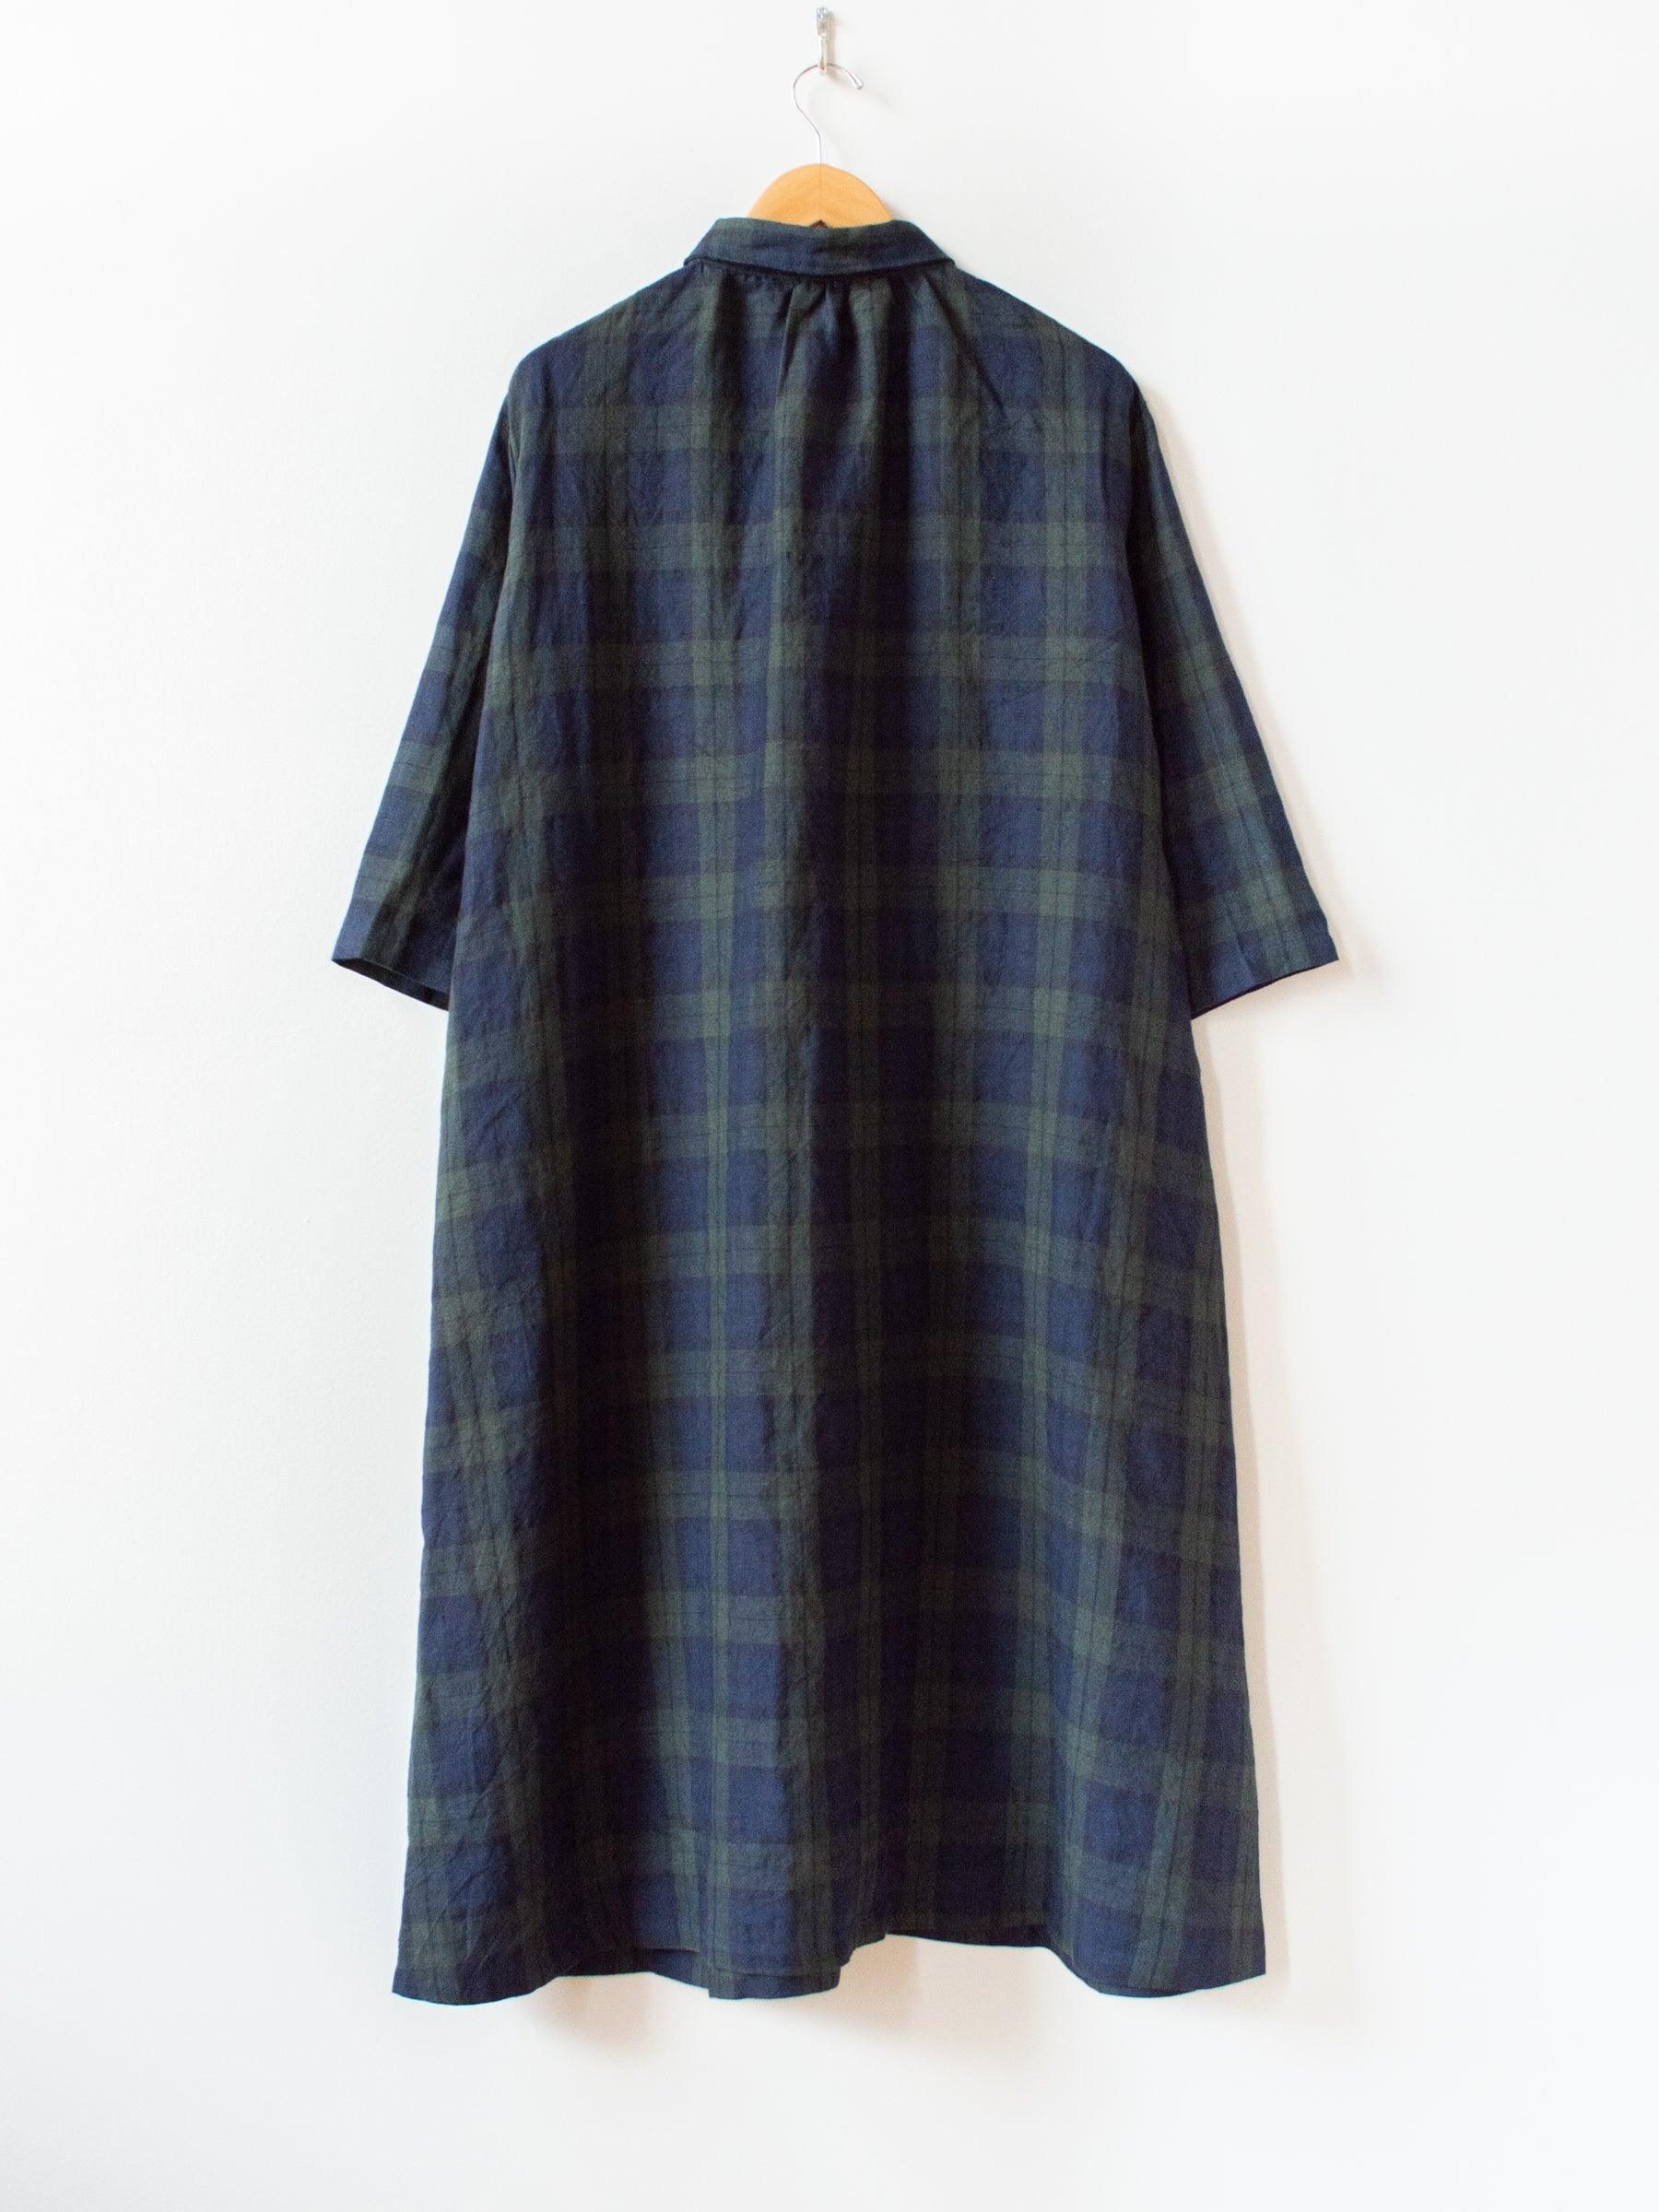 Namu Shop - Ichi Antiquites Linen Tartan BD Dress - Olive x Navy